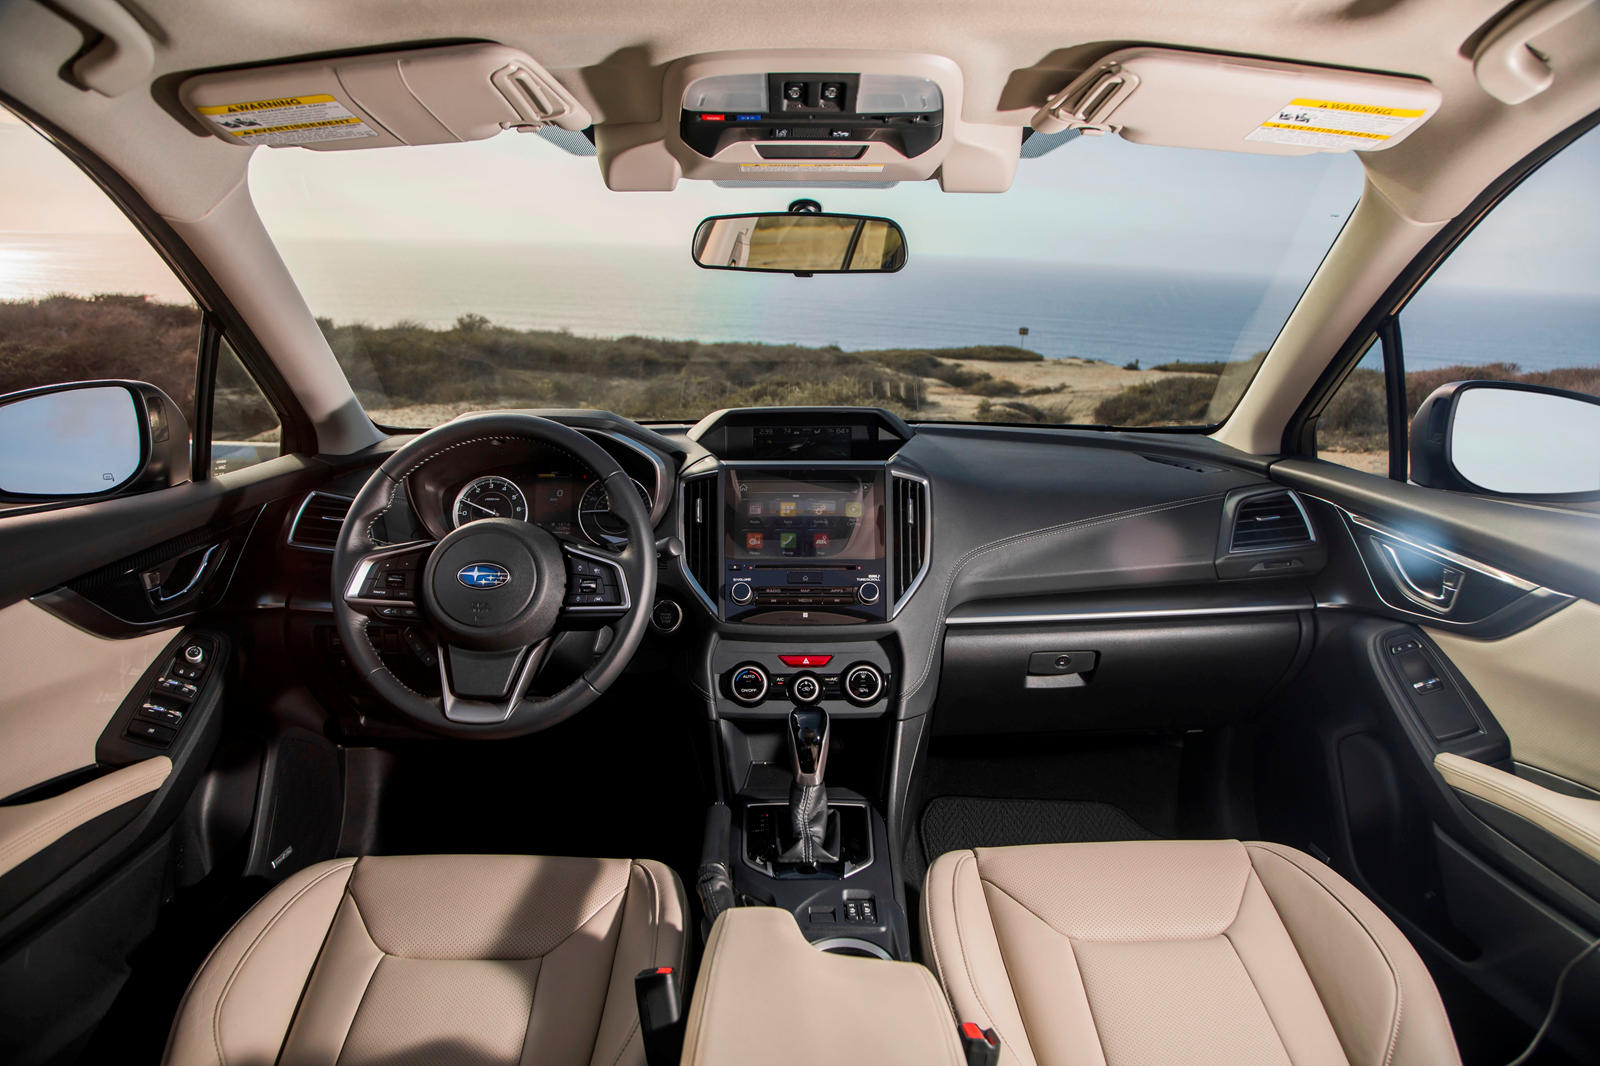 2019 Subaru Impreza Hatchback Dashboard